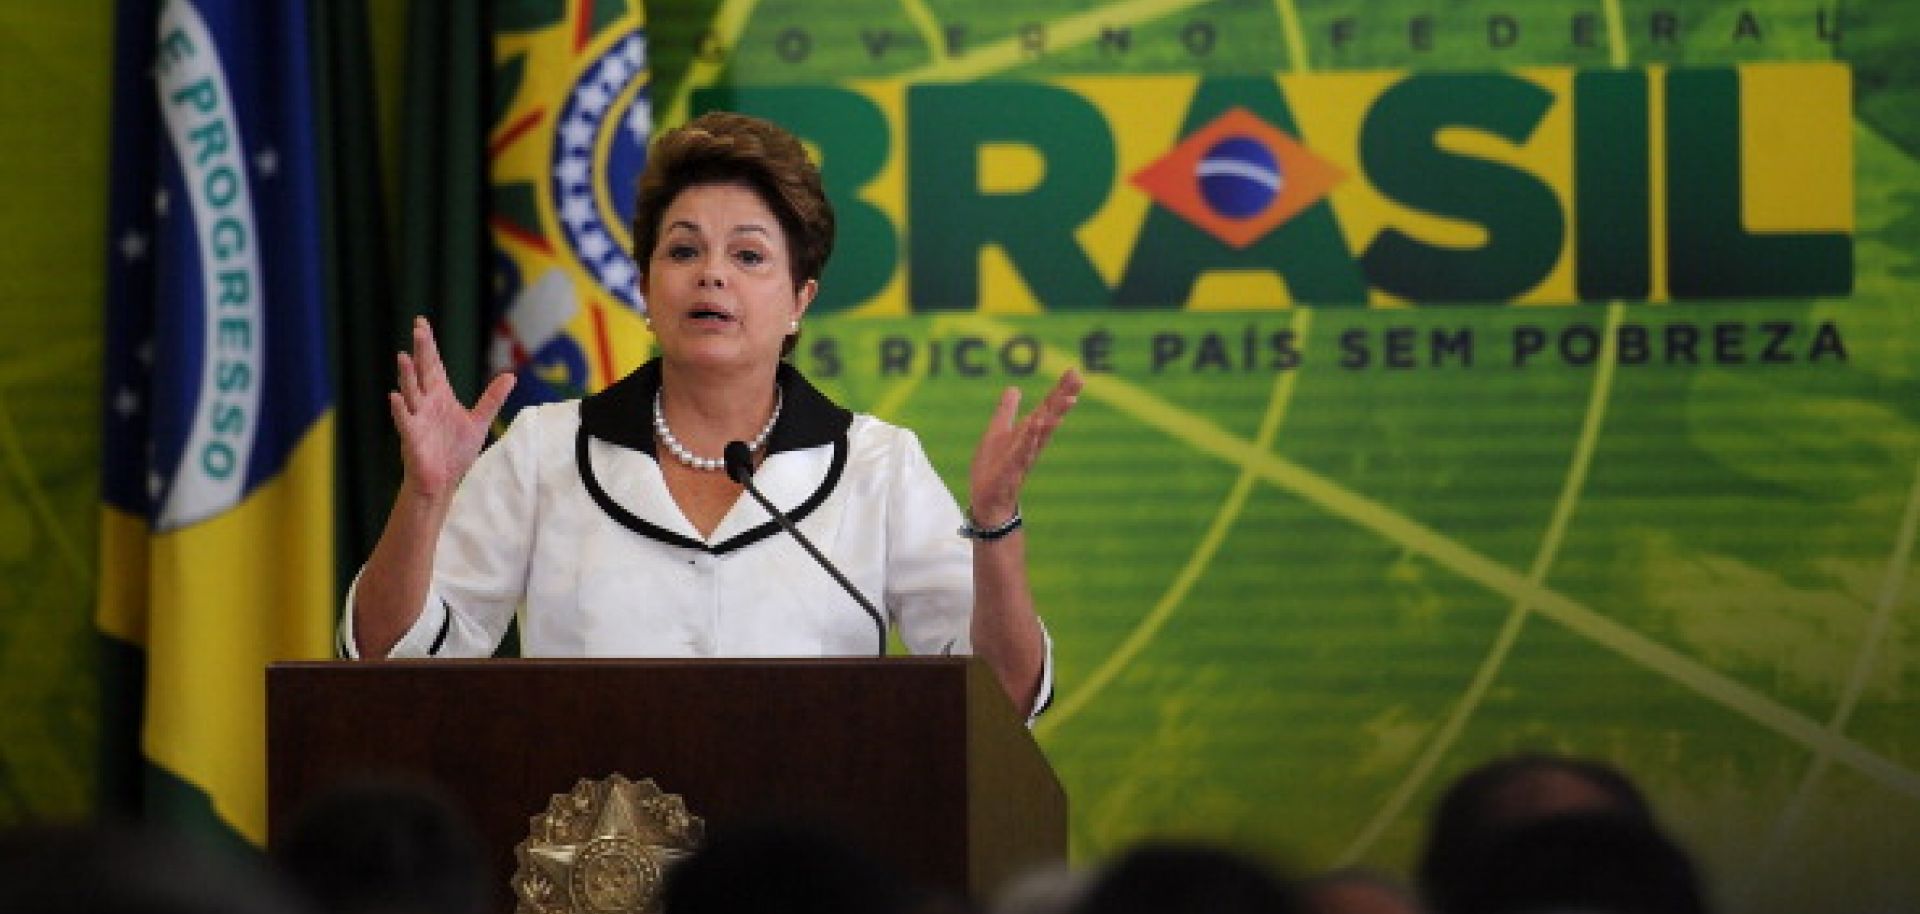 Brazil: Economic Downturn An Opportunity For Improvement